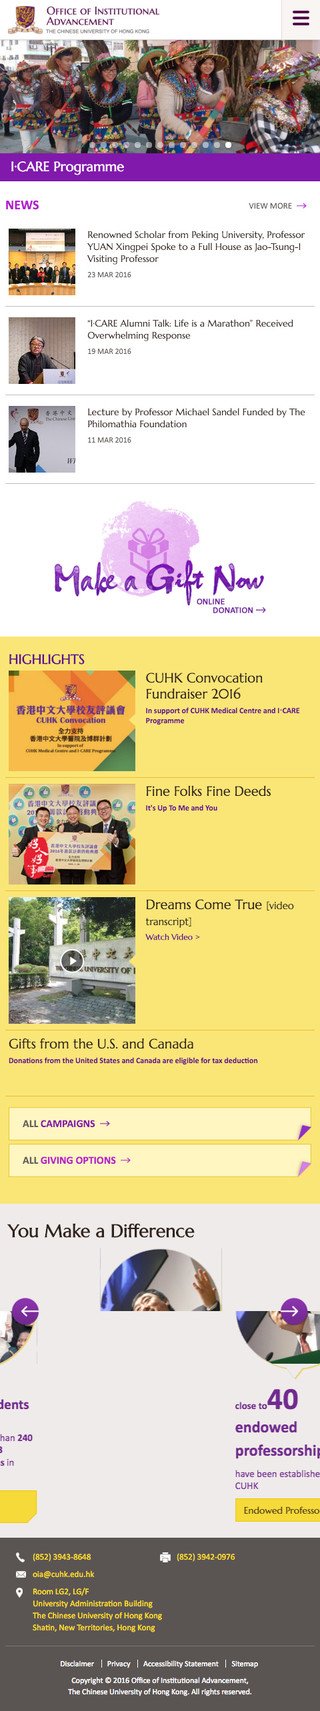 Chinese University of Hong Kong website screenshot for mobile version 1 of 5